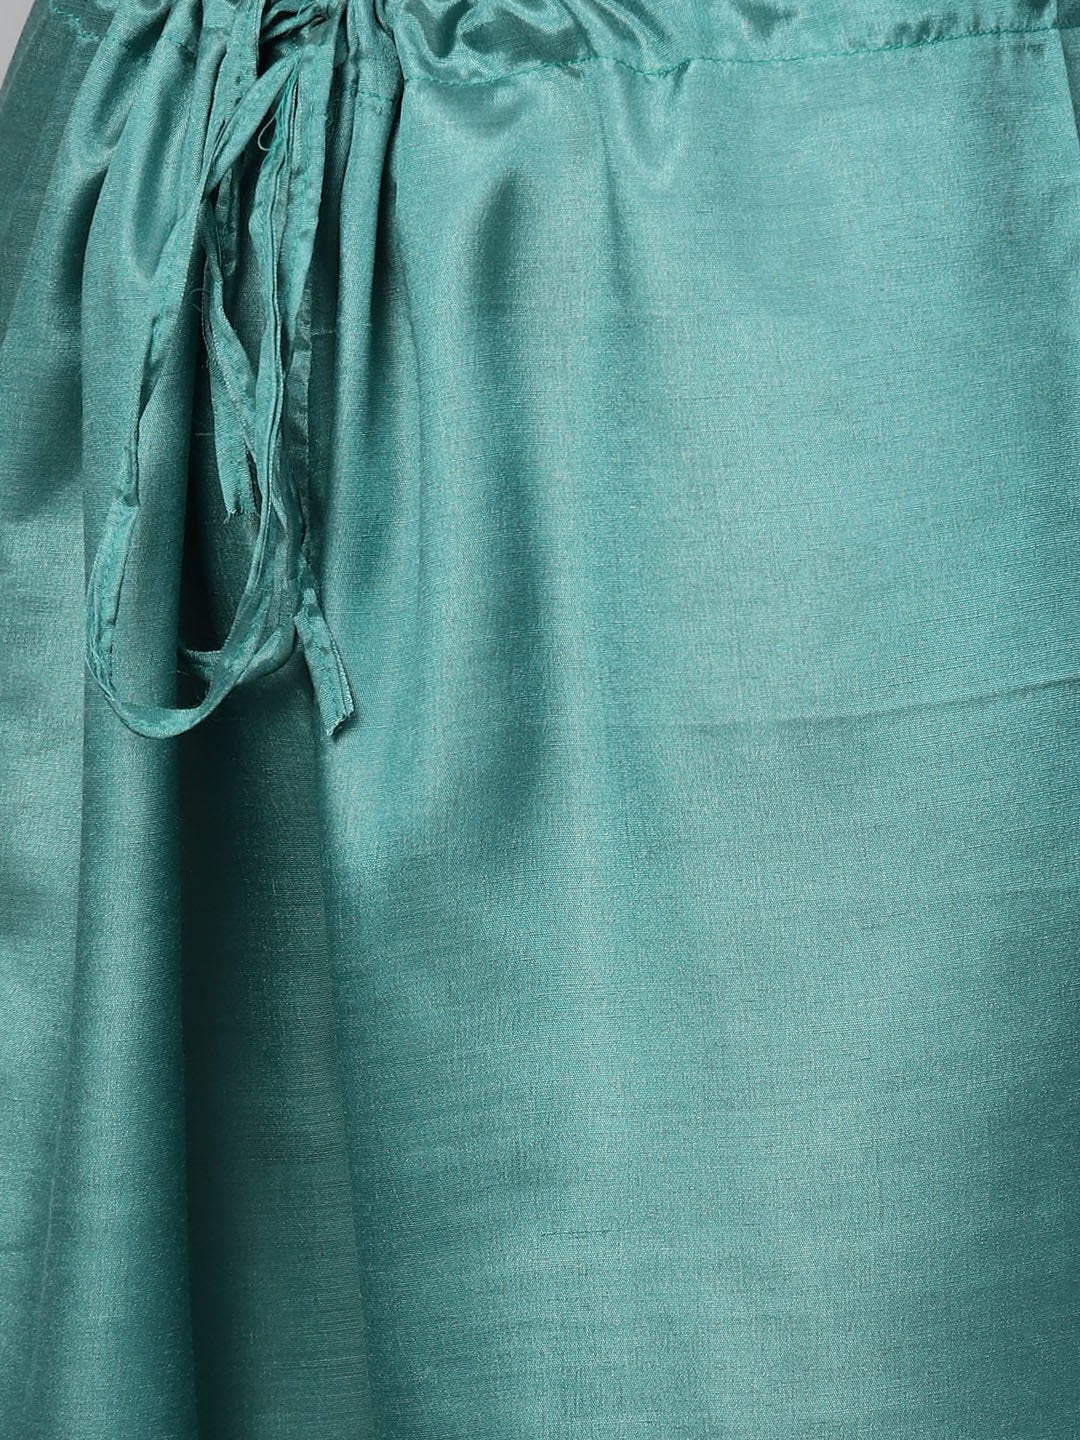 Ishin Women's Net Beige & Blue Embroidered A-Line Kurta Palazzo Dupatta Set